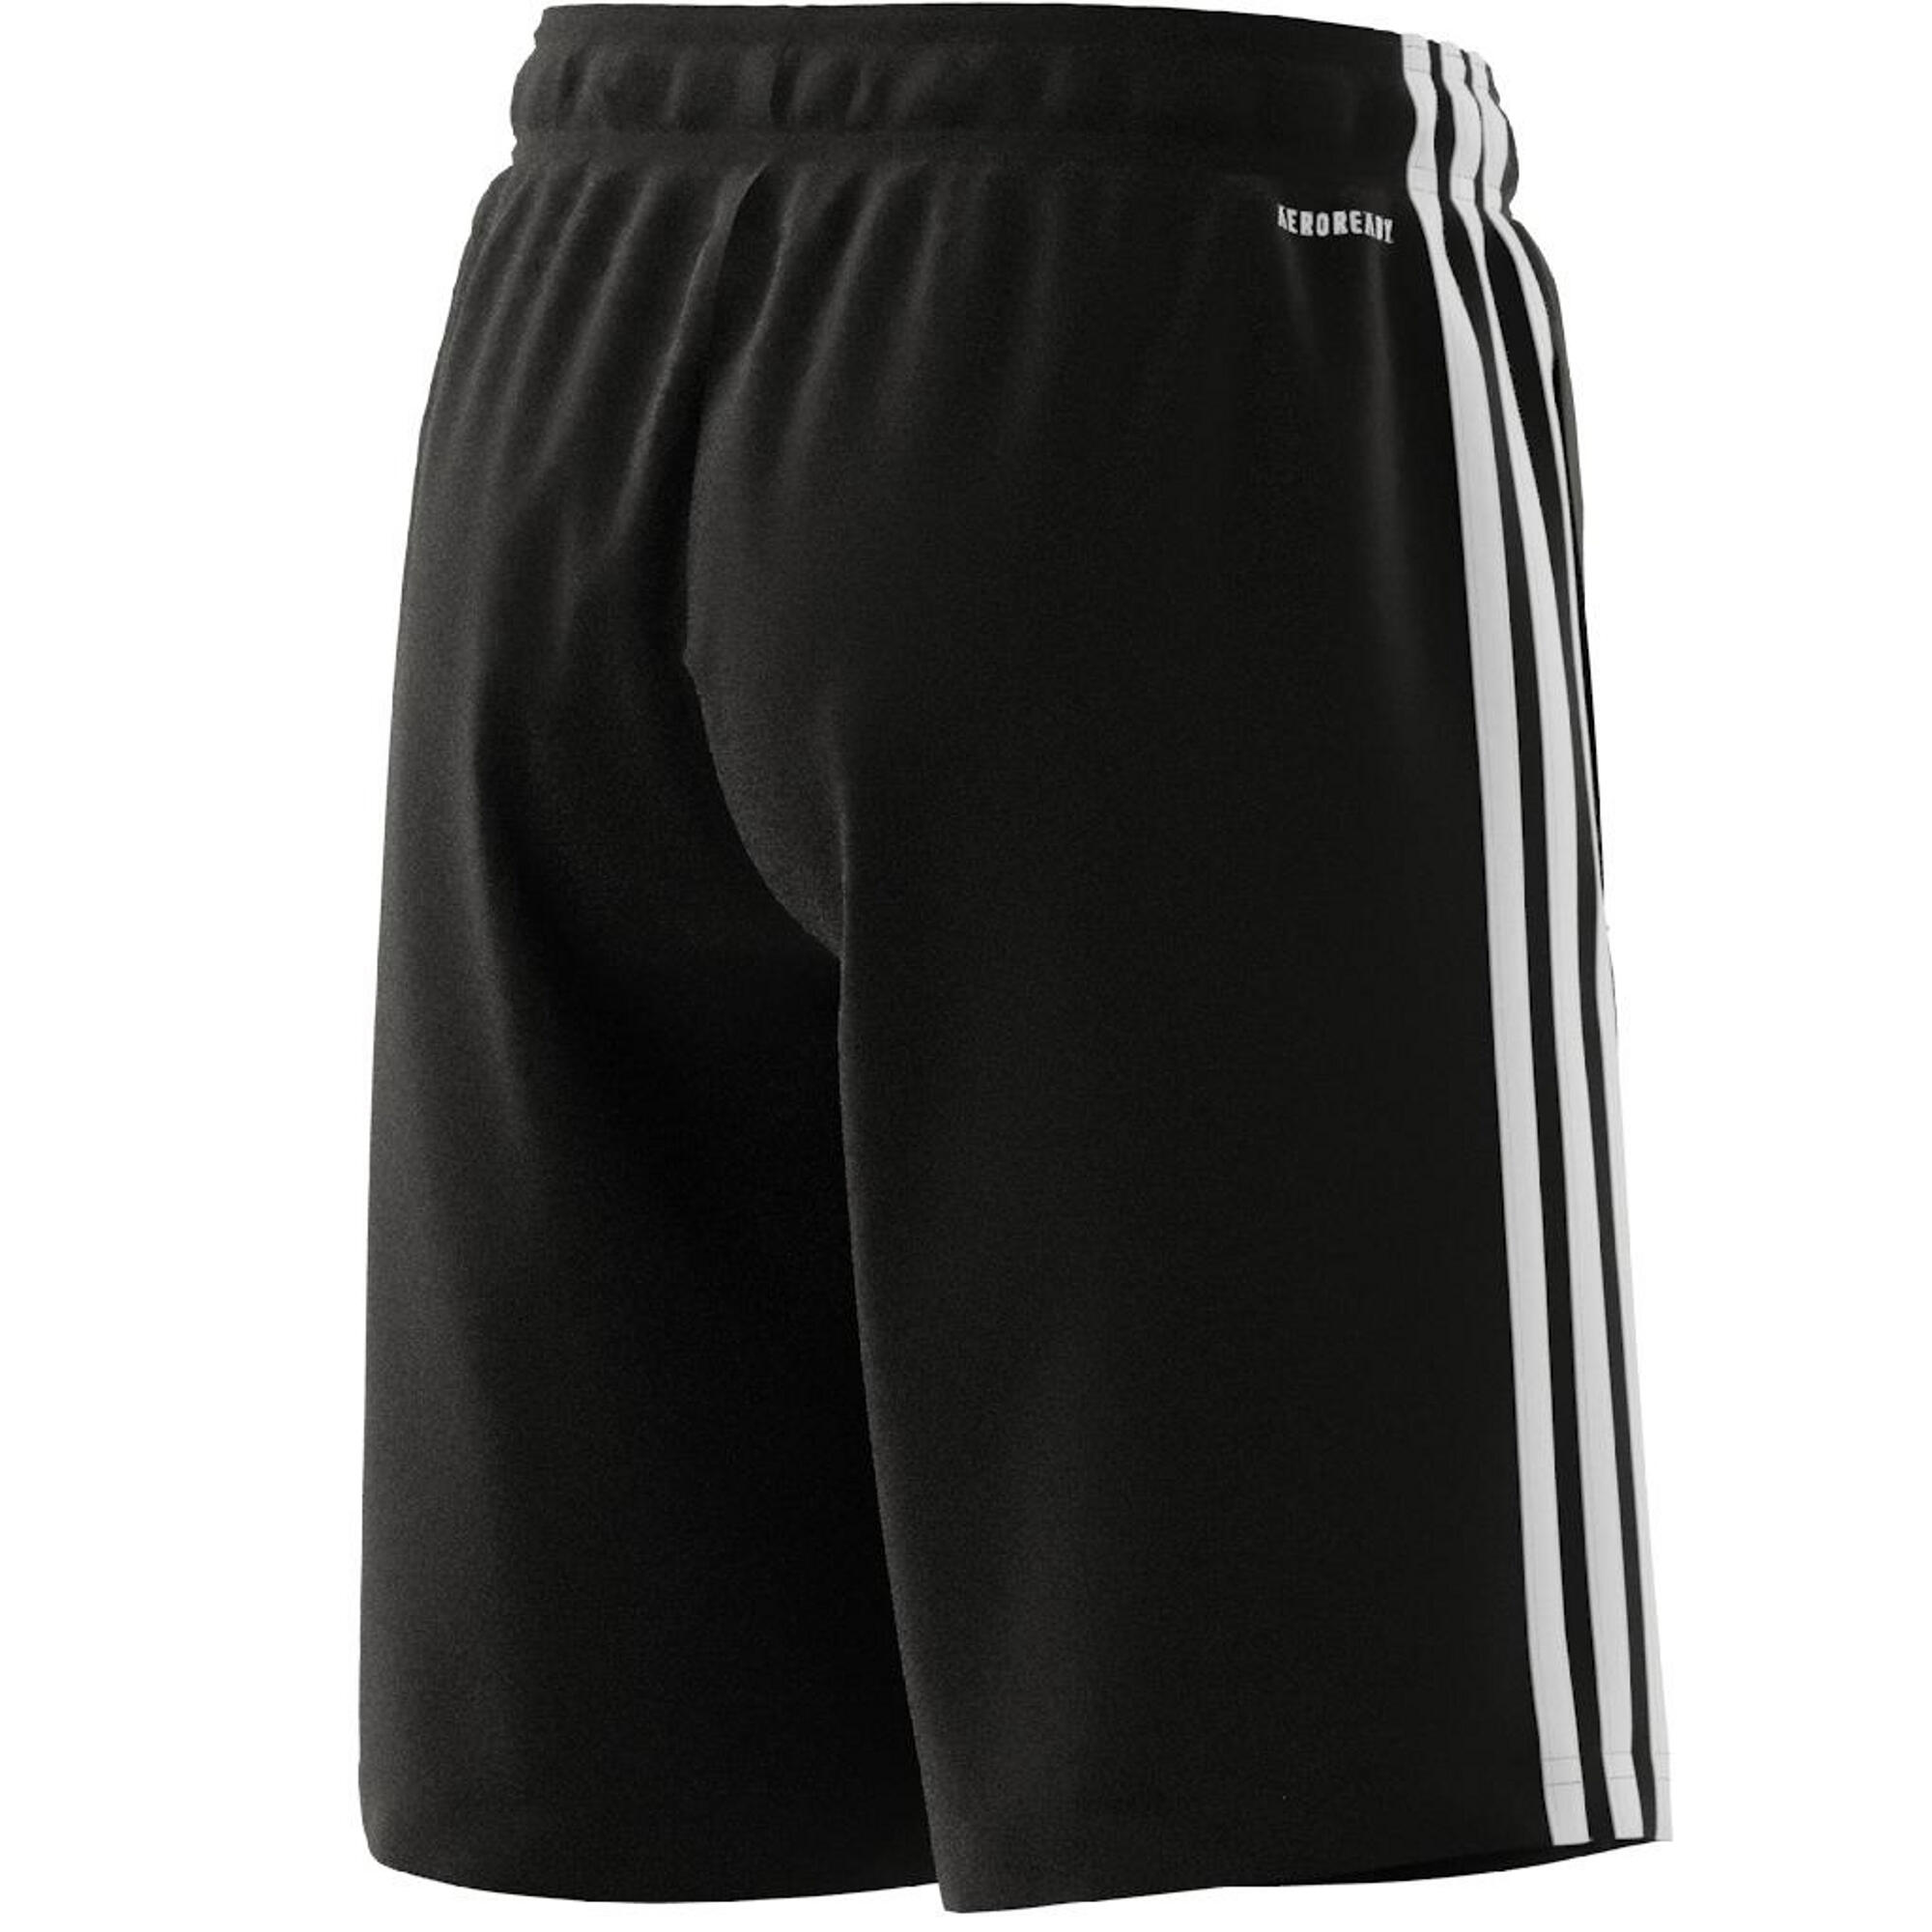 Boys' Shorts 3 Stripes - Black 4/7